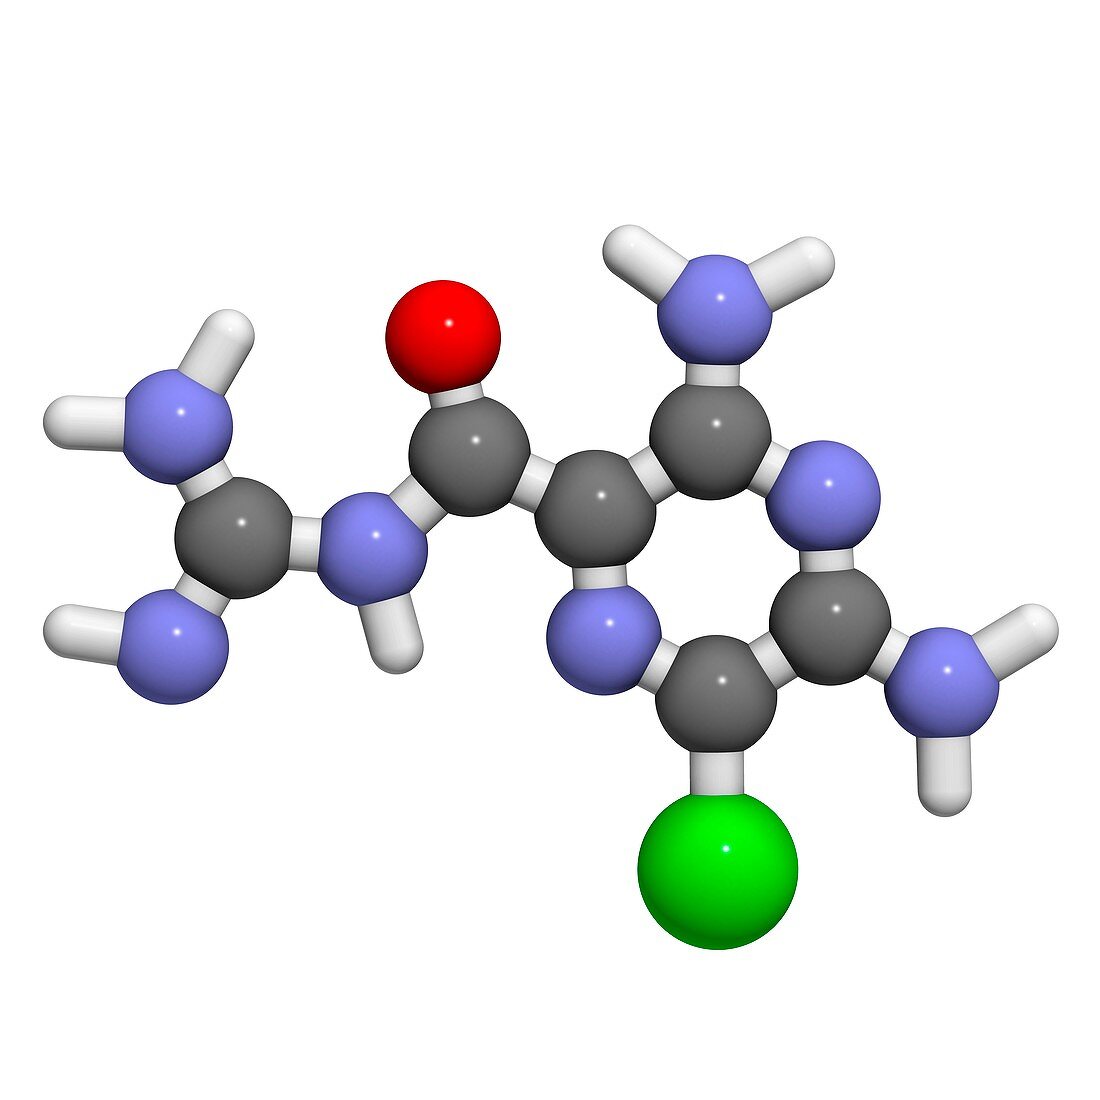 Amiloride diuretic drug molecule